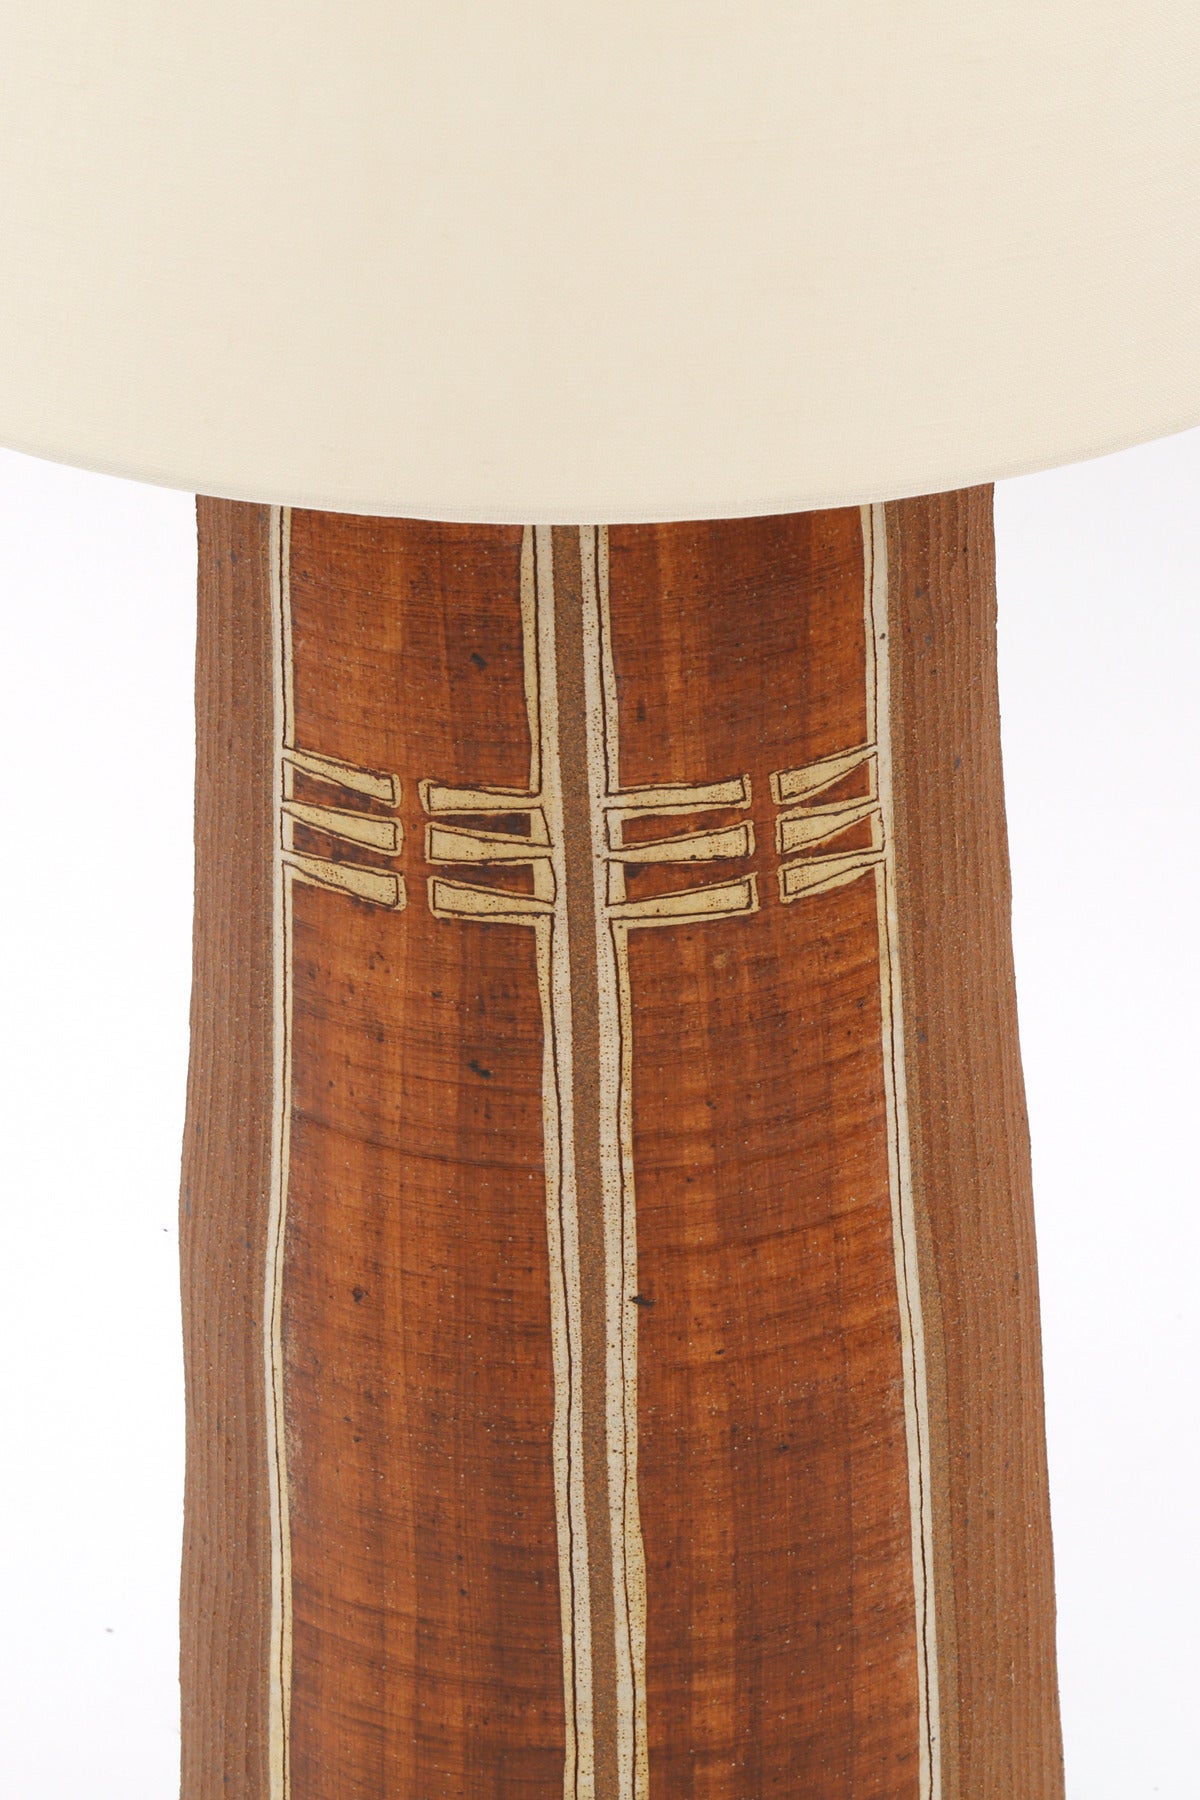 American Monumental Glazed Earthenware Lamp